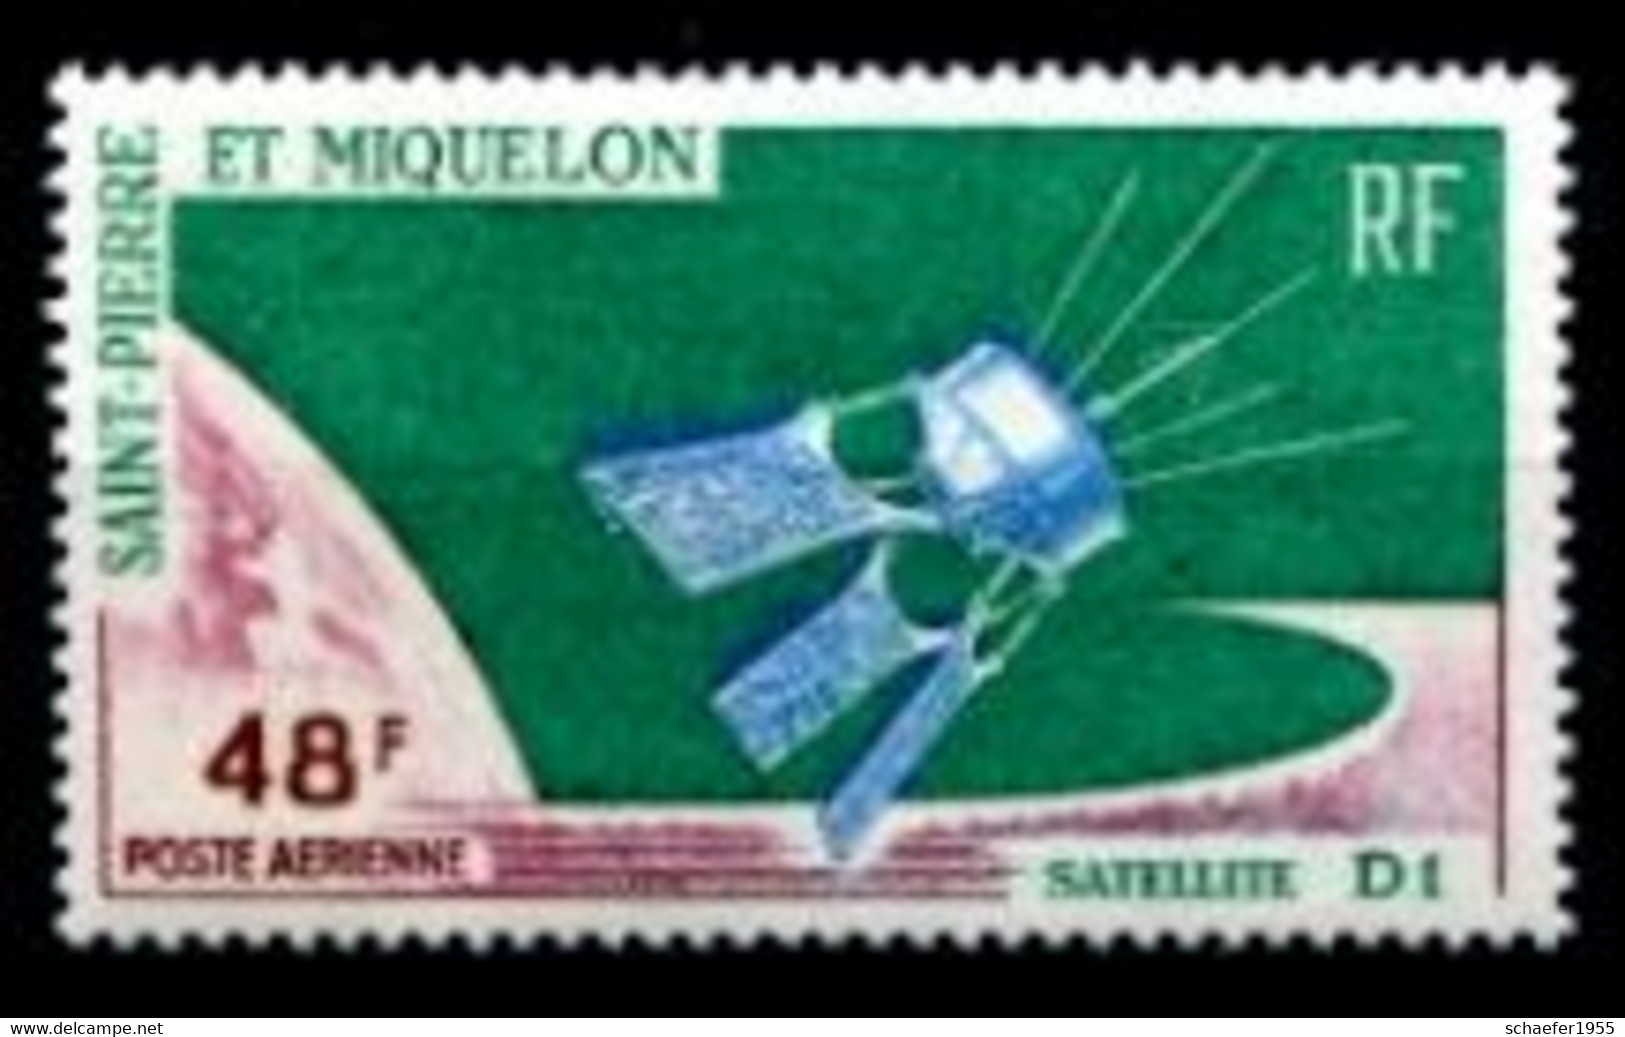 Saint Pierre Et Miquelon 1966 Satellite D1 FDC + Stamp - Noord-Amerika